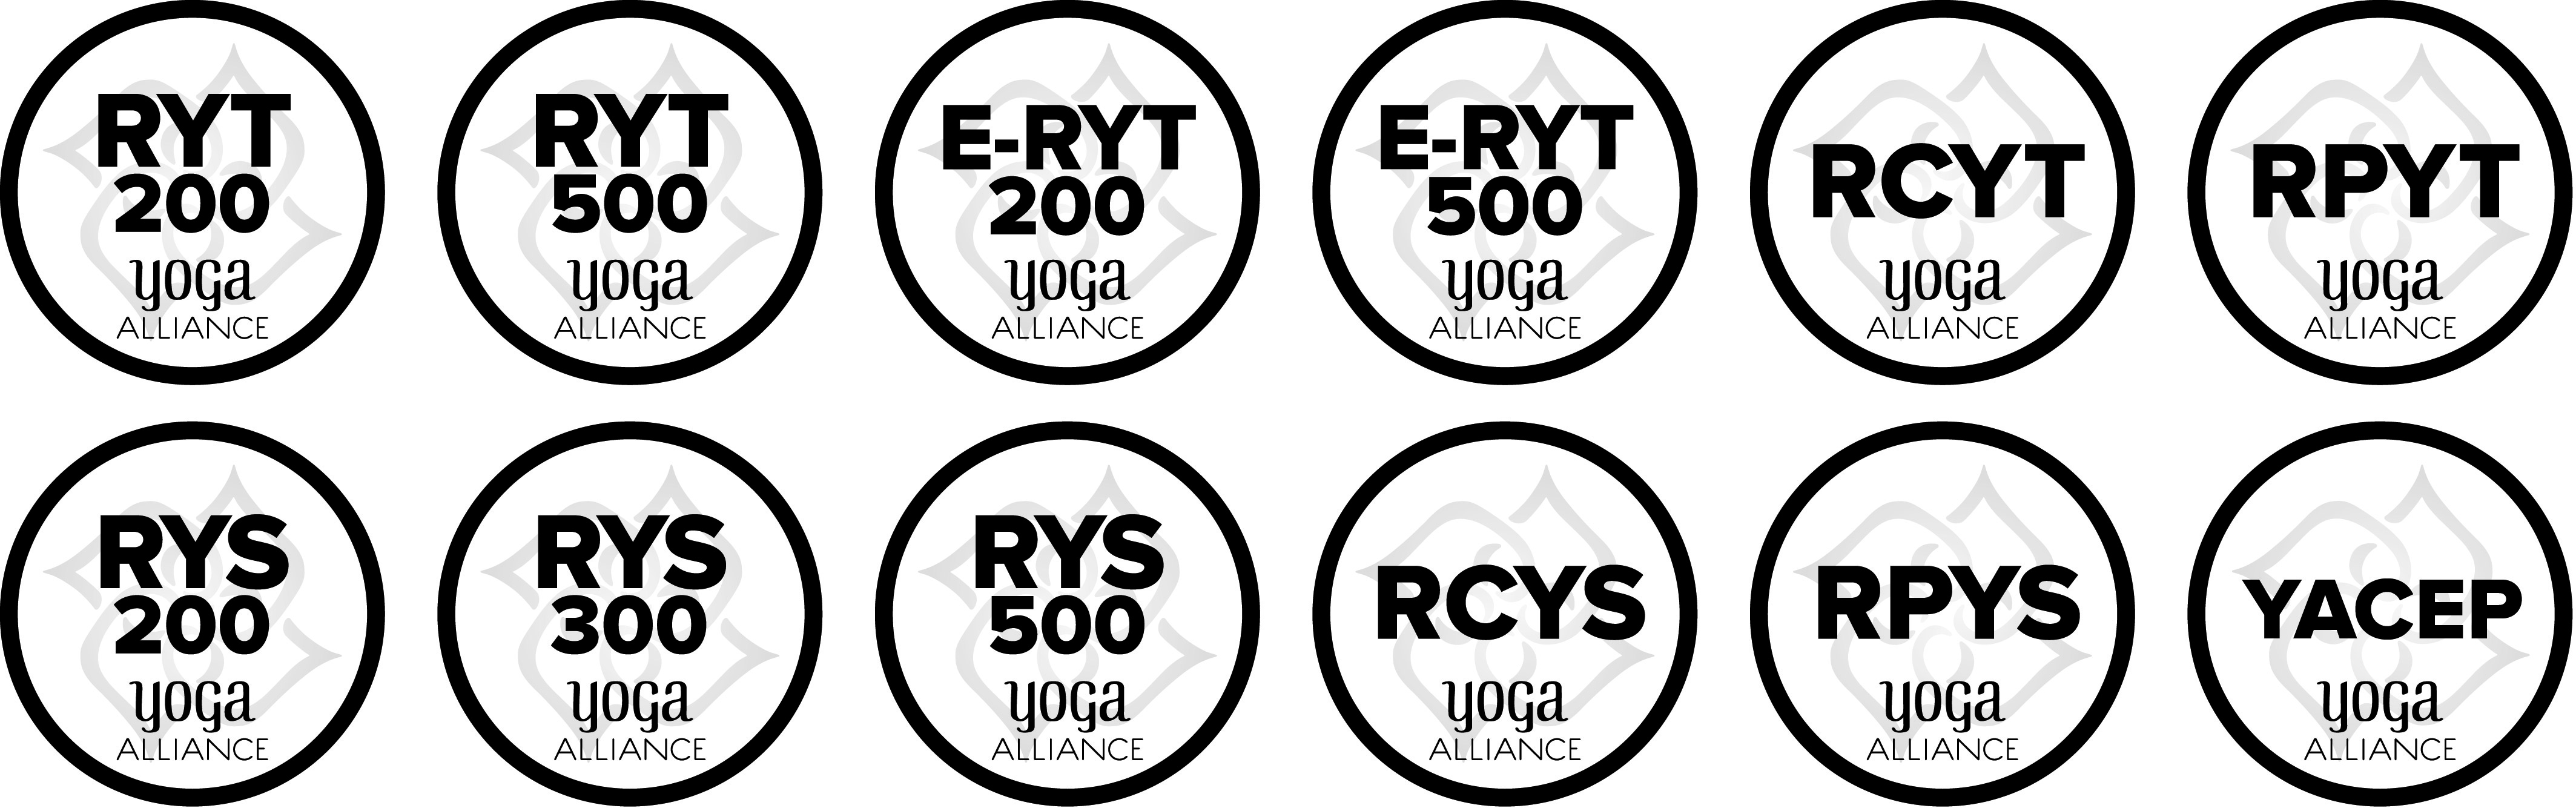 Yoga alliance ryt Logos